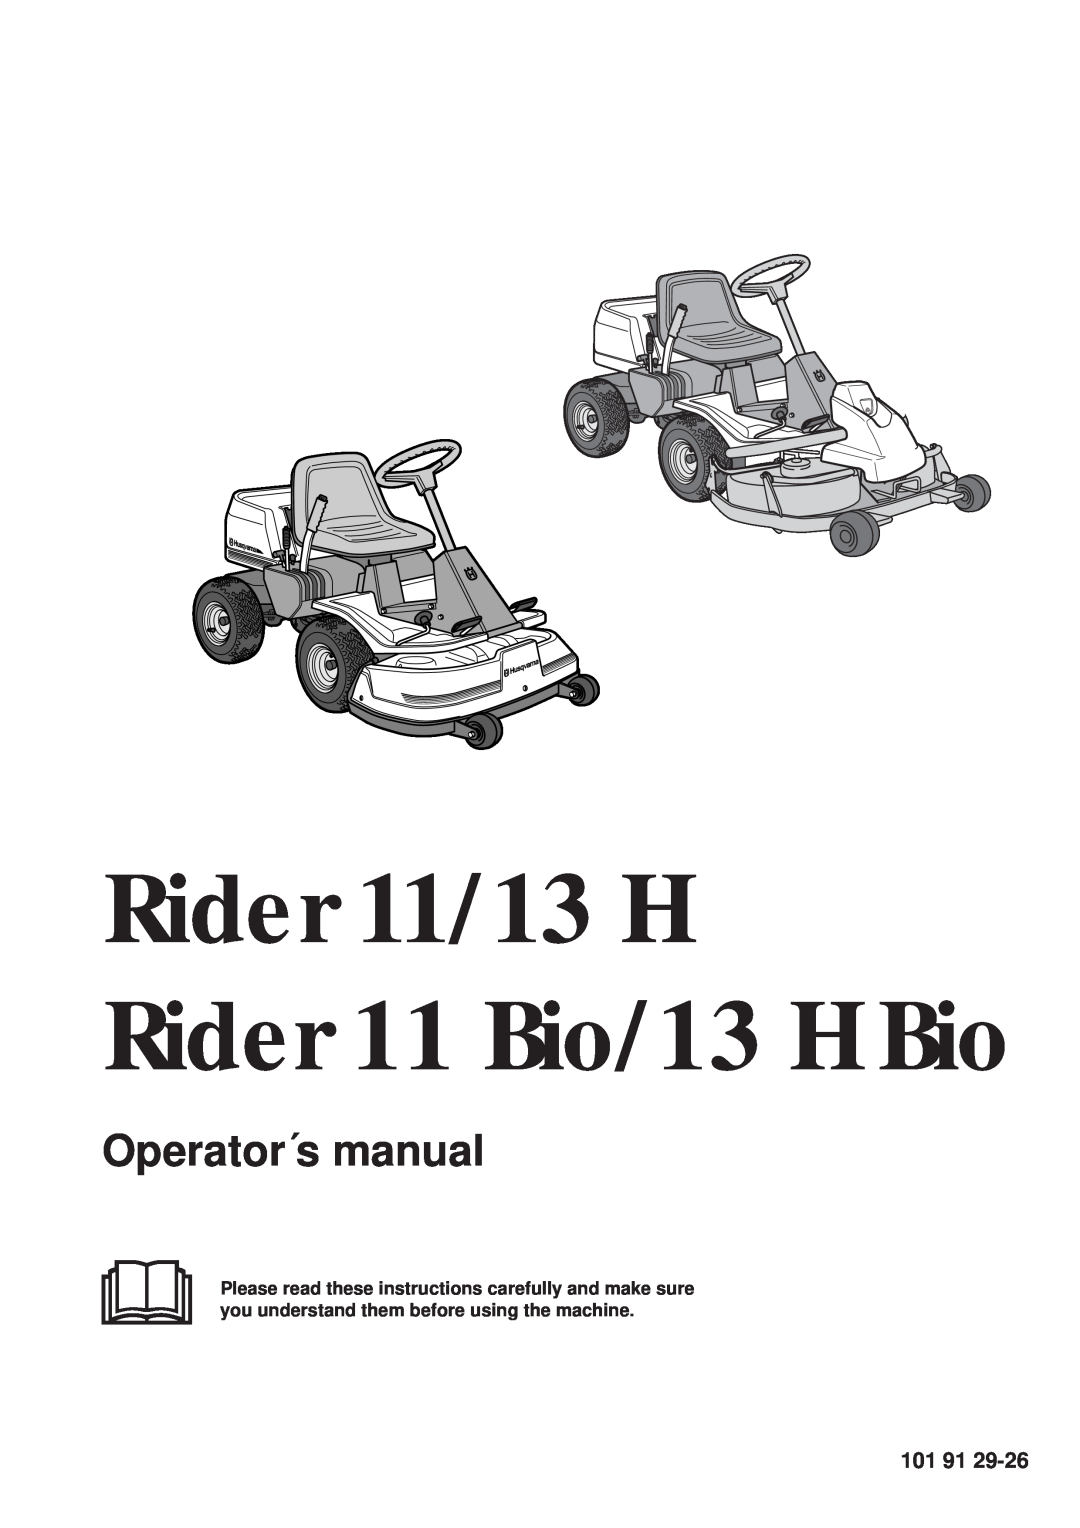 Husqvarna manual 101, Rider 11/13 H Rider 11 Bio/13 H Bio, Operator´s manual 